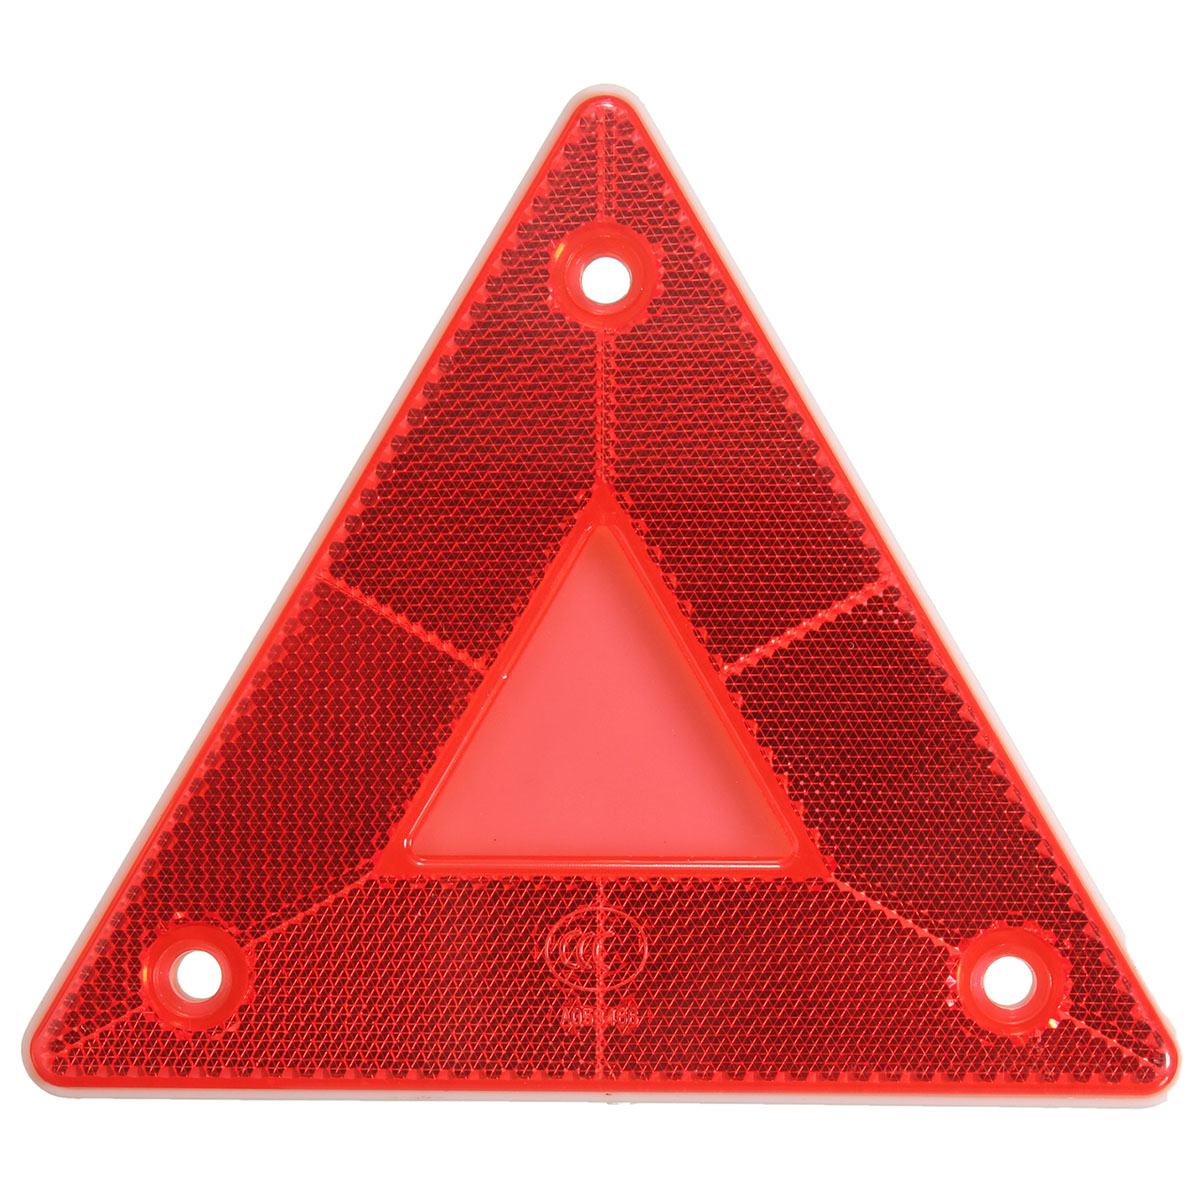 2 stk trekant rød reflekterende bil advarsel om nedbrud i bil til lastbiler med trailere campingvogne lastbilbus